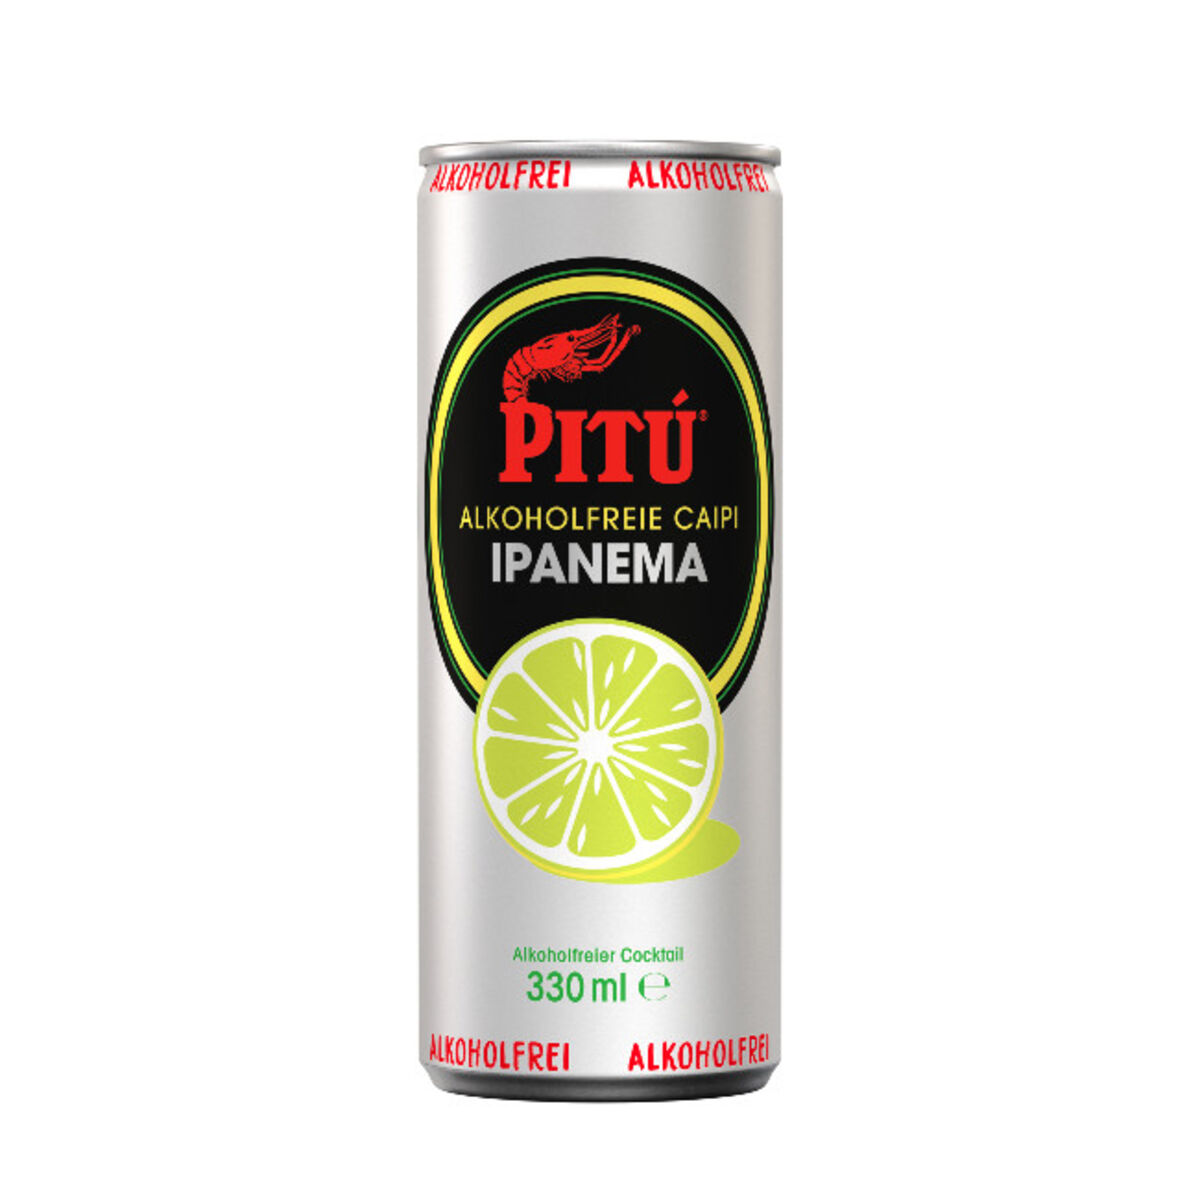 PITÚ Ipanema – die erste alkoholfreie Caipi to go!